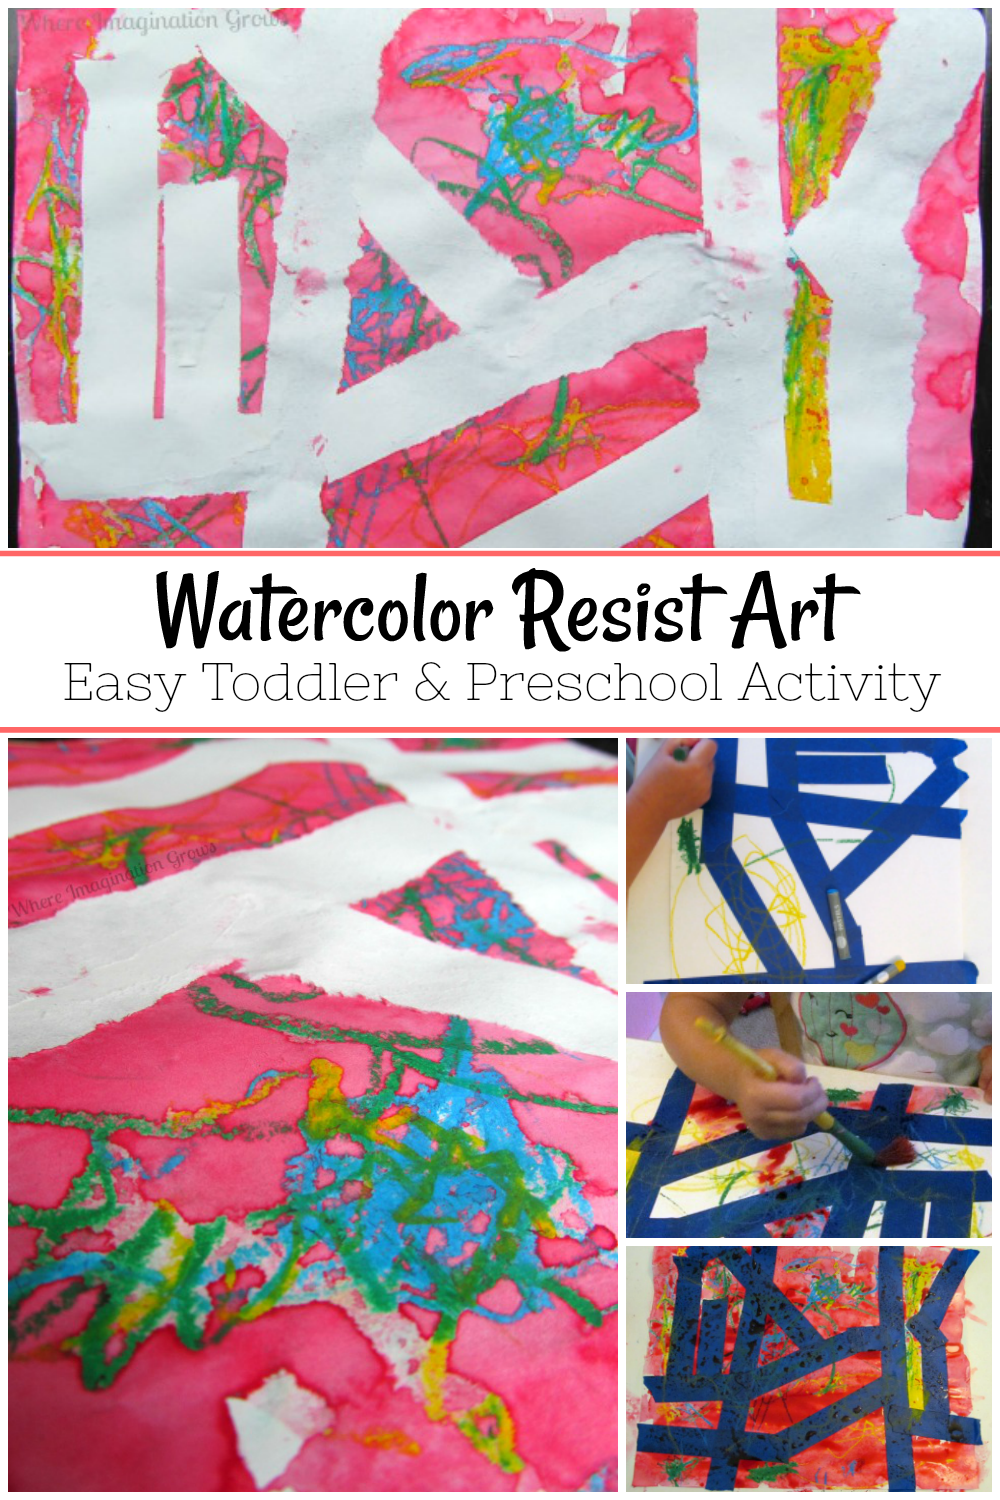 Watercolor Resist Preschool & Toddler Art Project